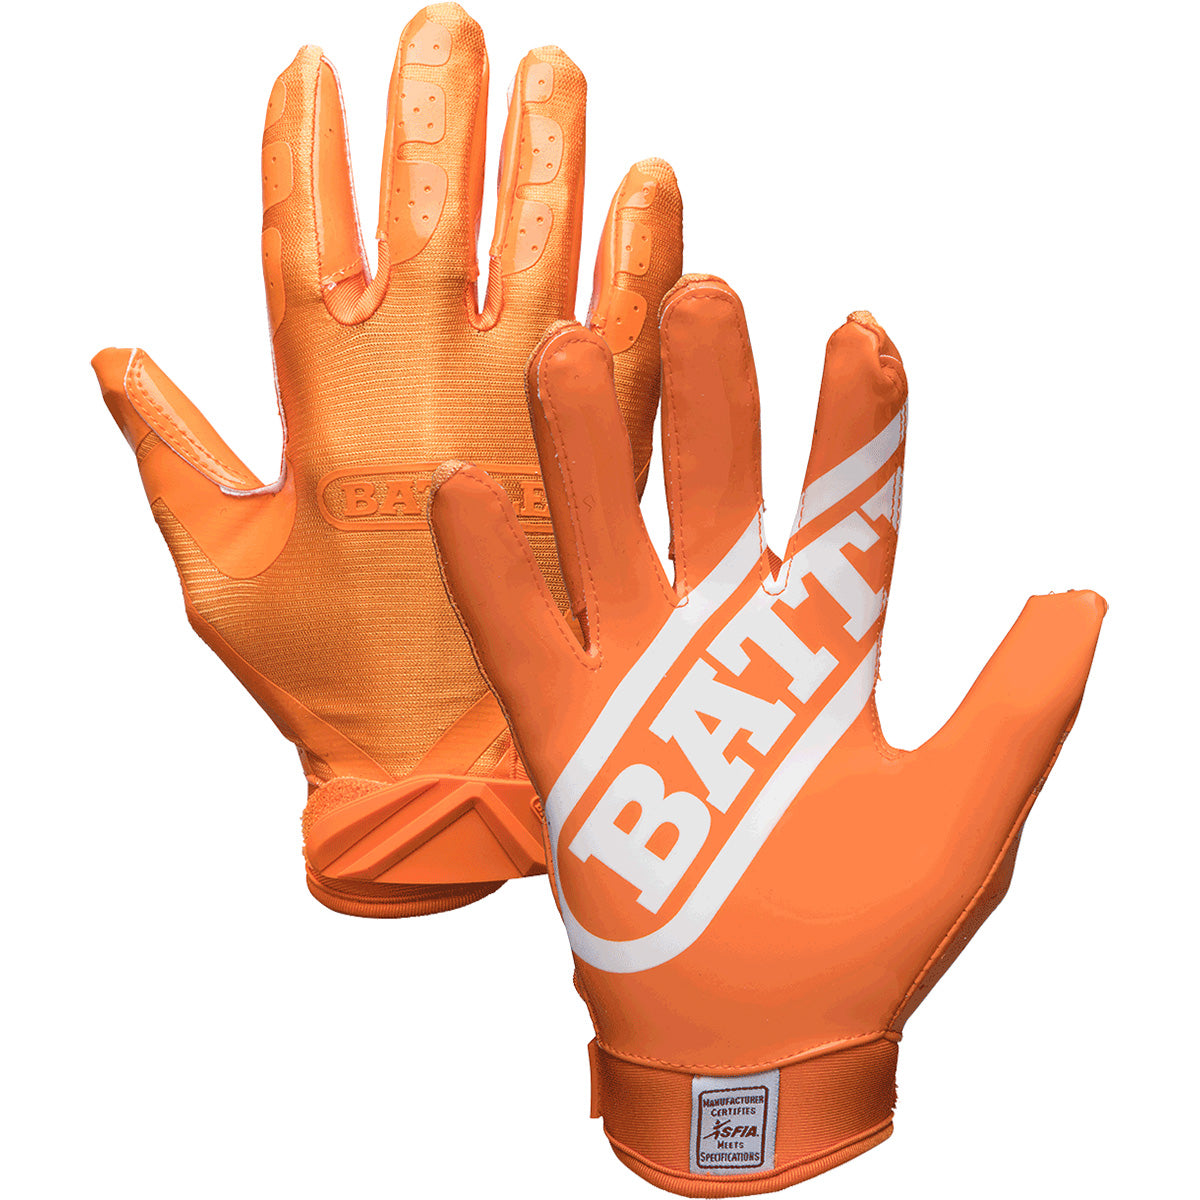 Battle Sports Adult DoubleThreat Football Gloves - Orange/Orange Battle Sports